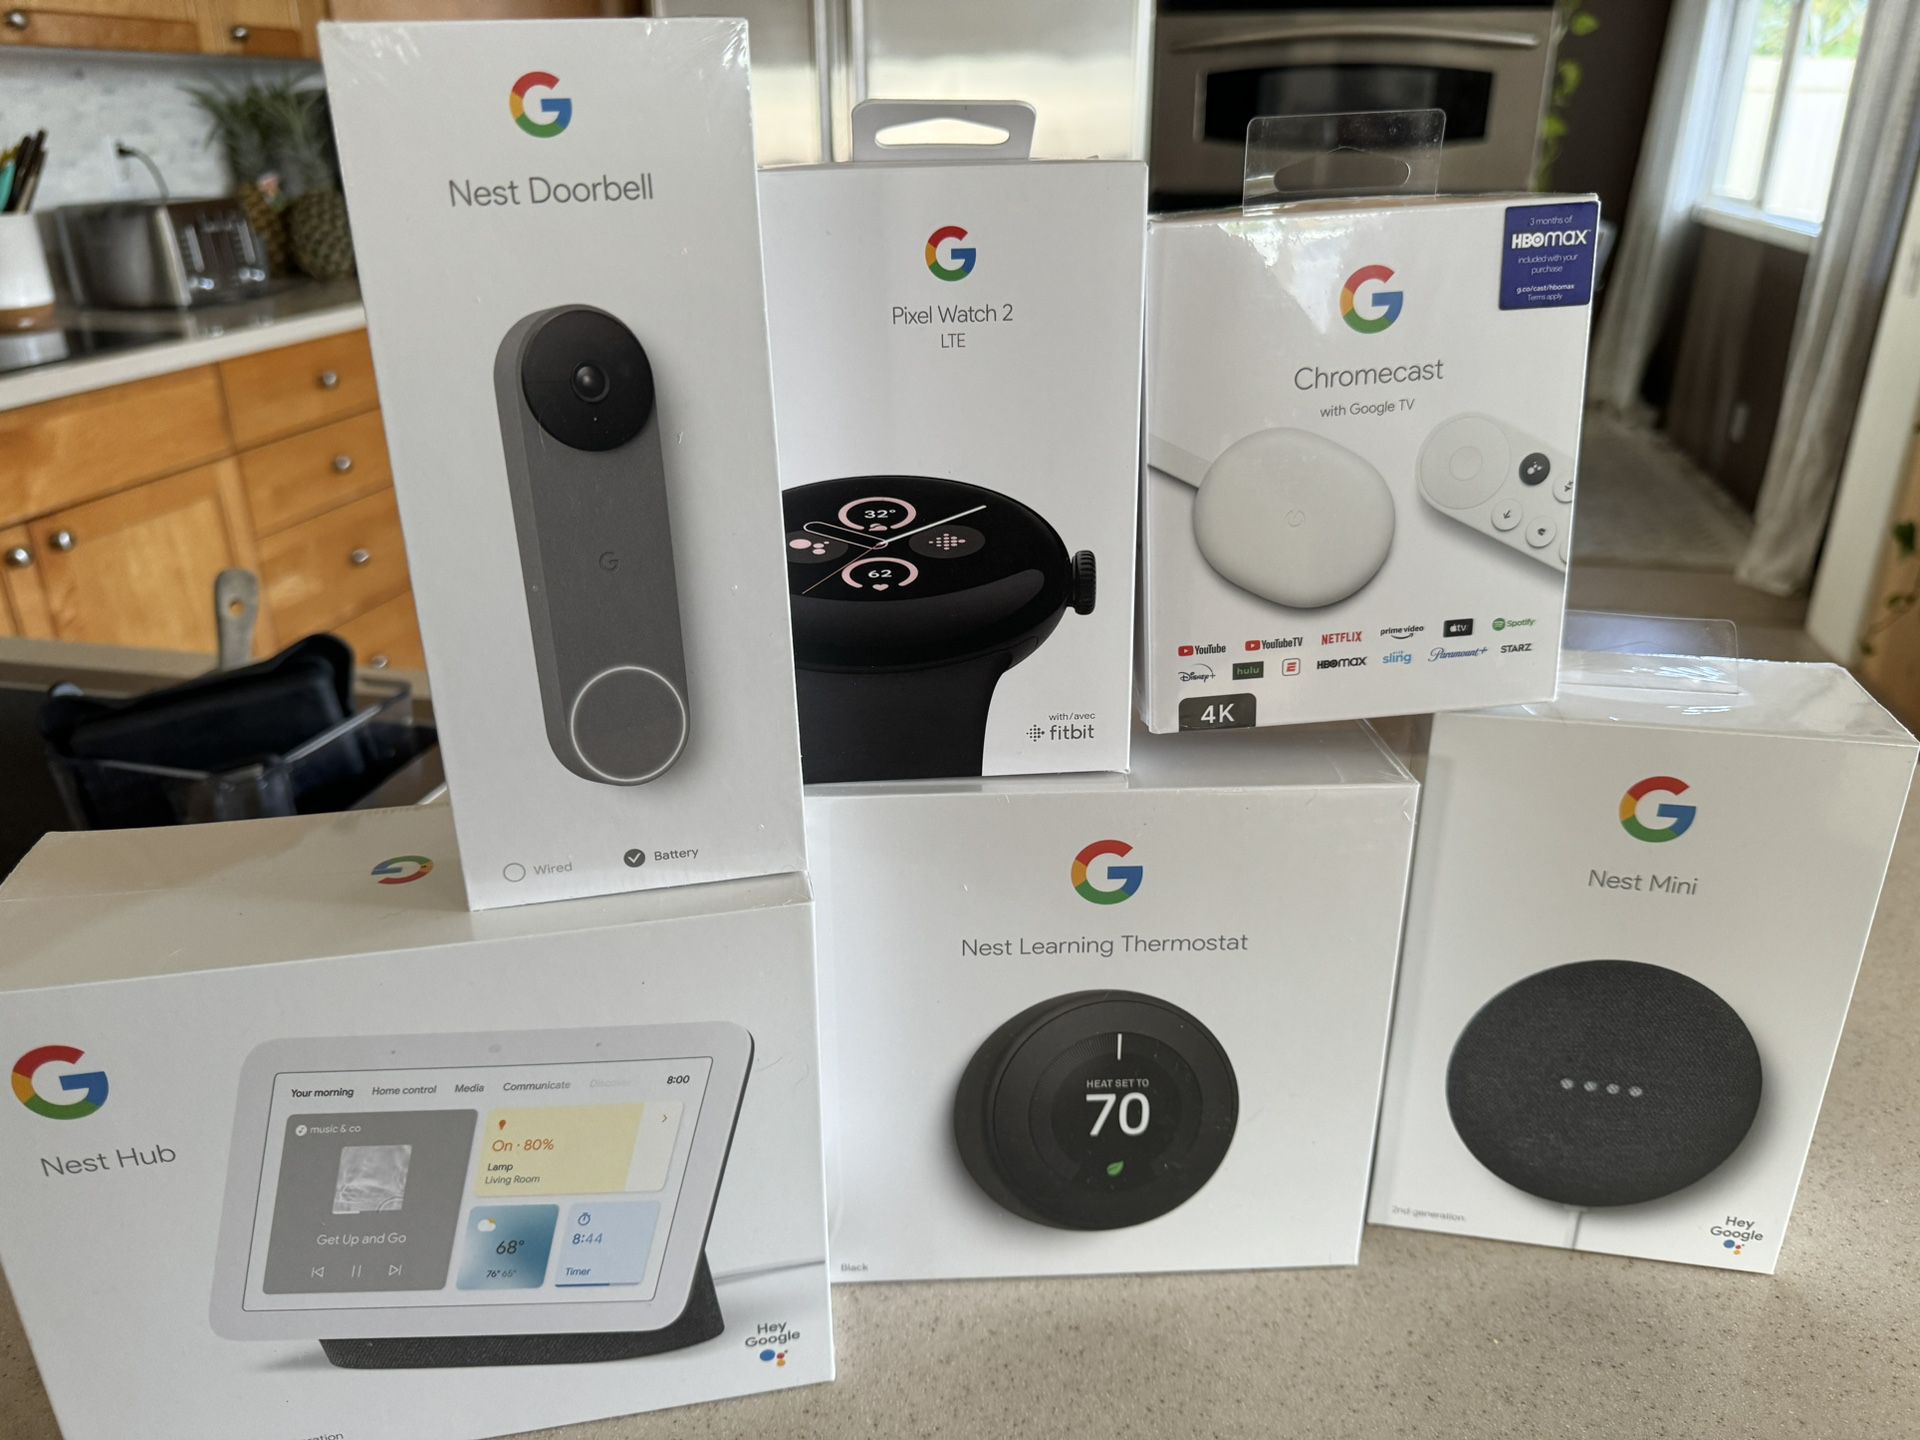 Brand New Google Smart Home System plus a bonus Galaxy Pixel Watch 2